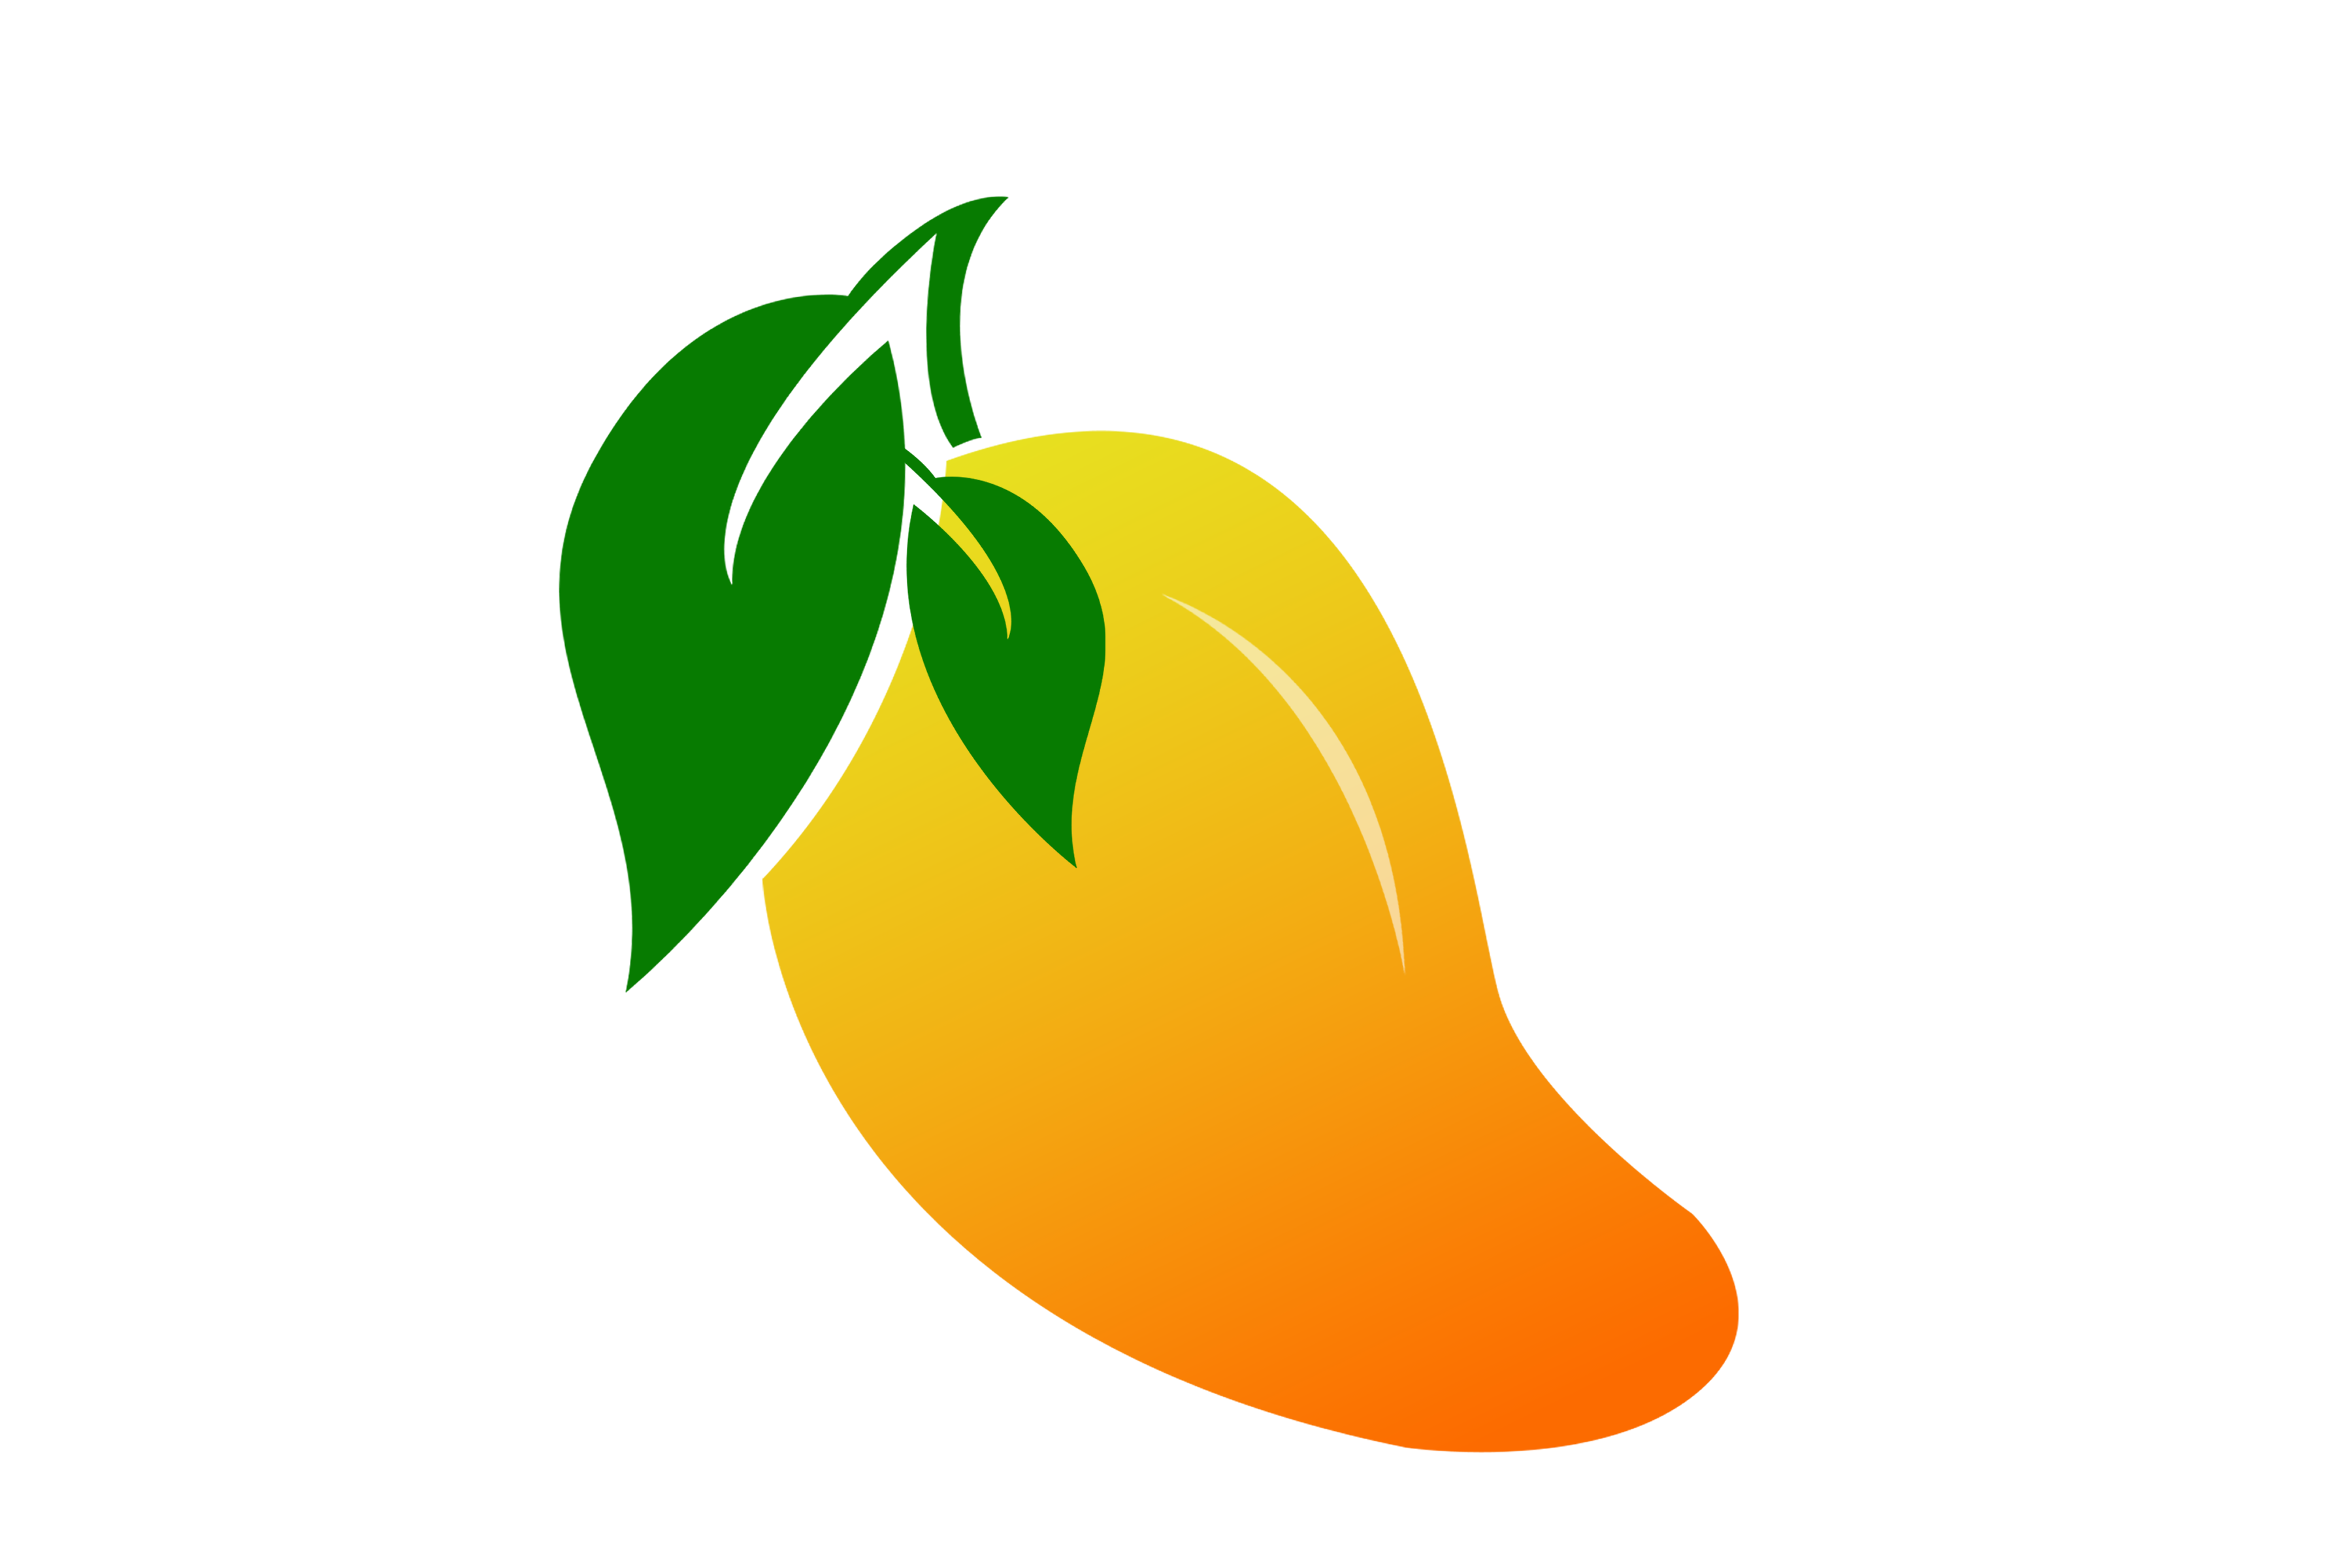 mango with leaf png image transparent background free download